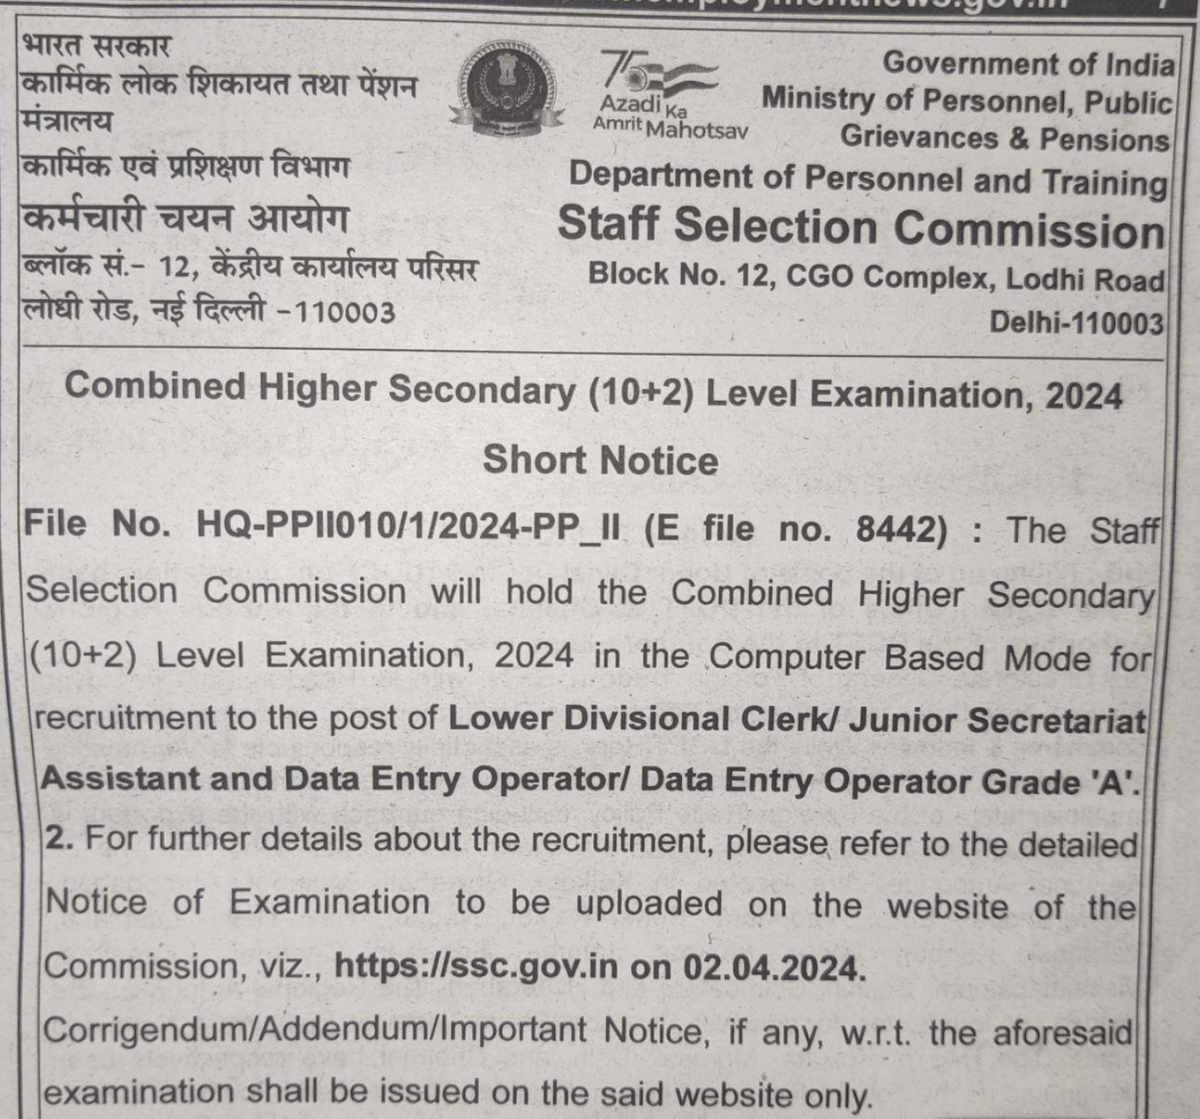 SSC CHSL 2024 Exam has been rescheduled due to General Elections in India.

#SSC #UPSC #UPSC2024 #upscholarship #upscaspirants #SSCCHSL